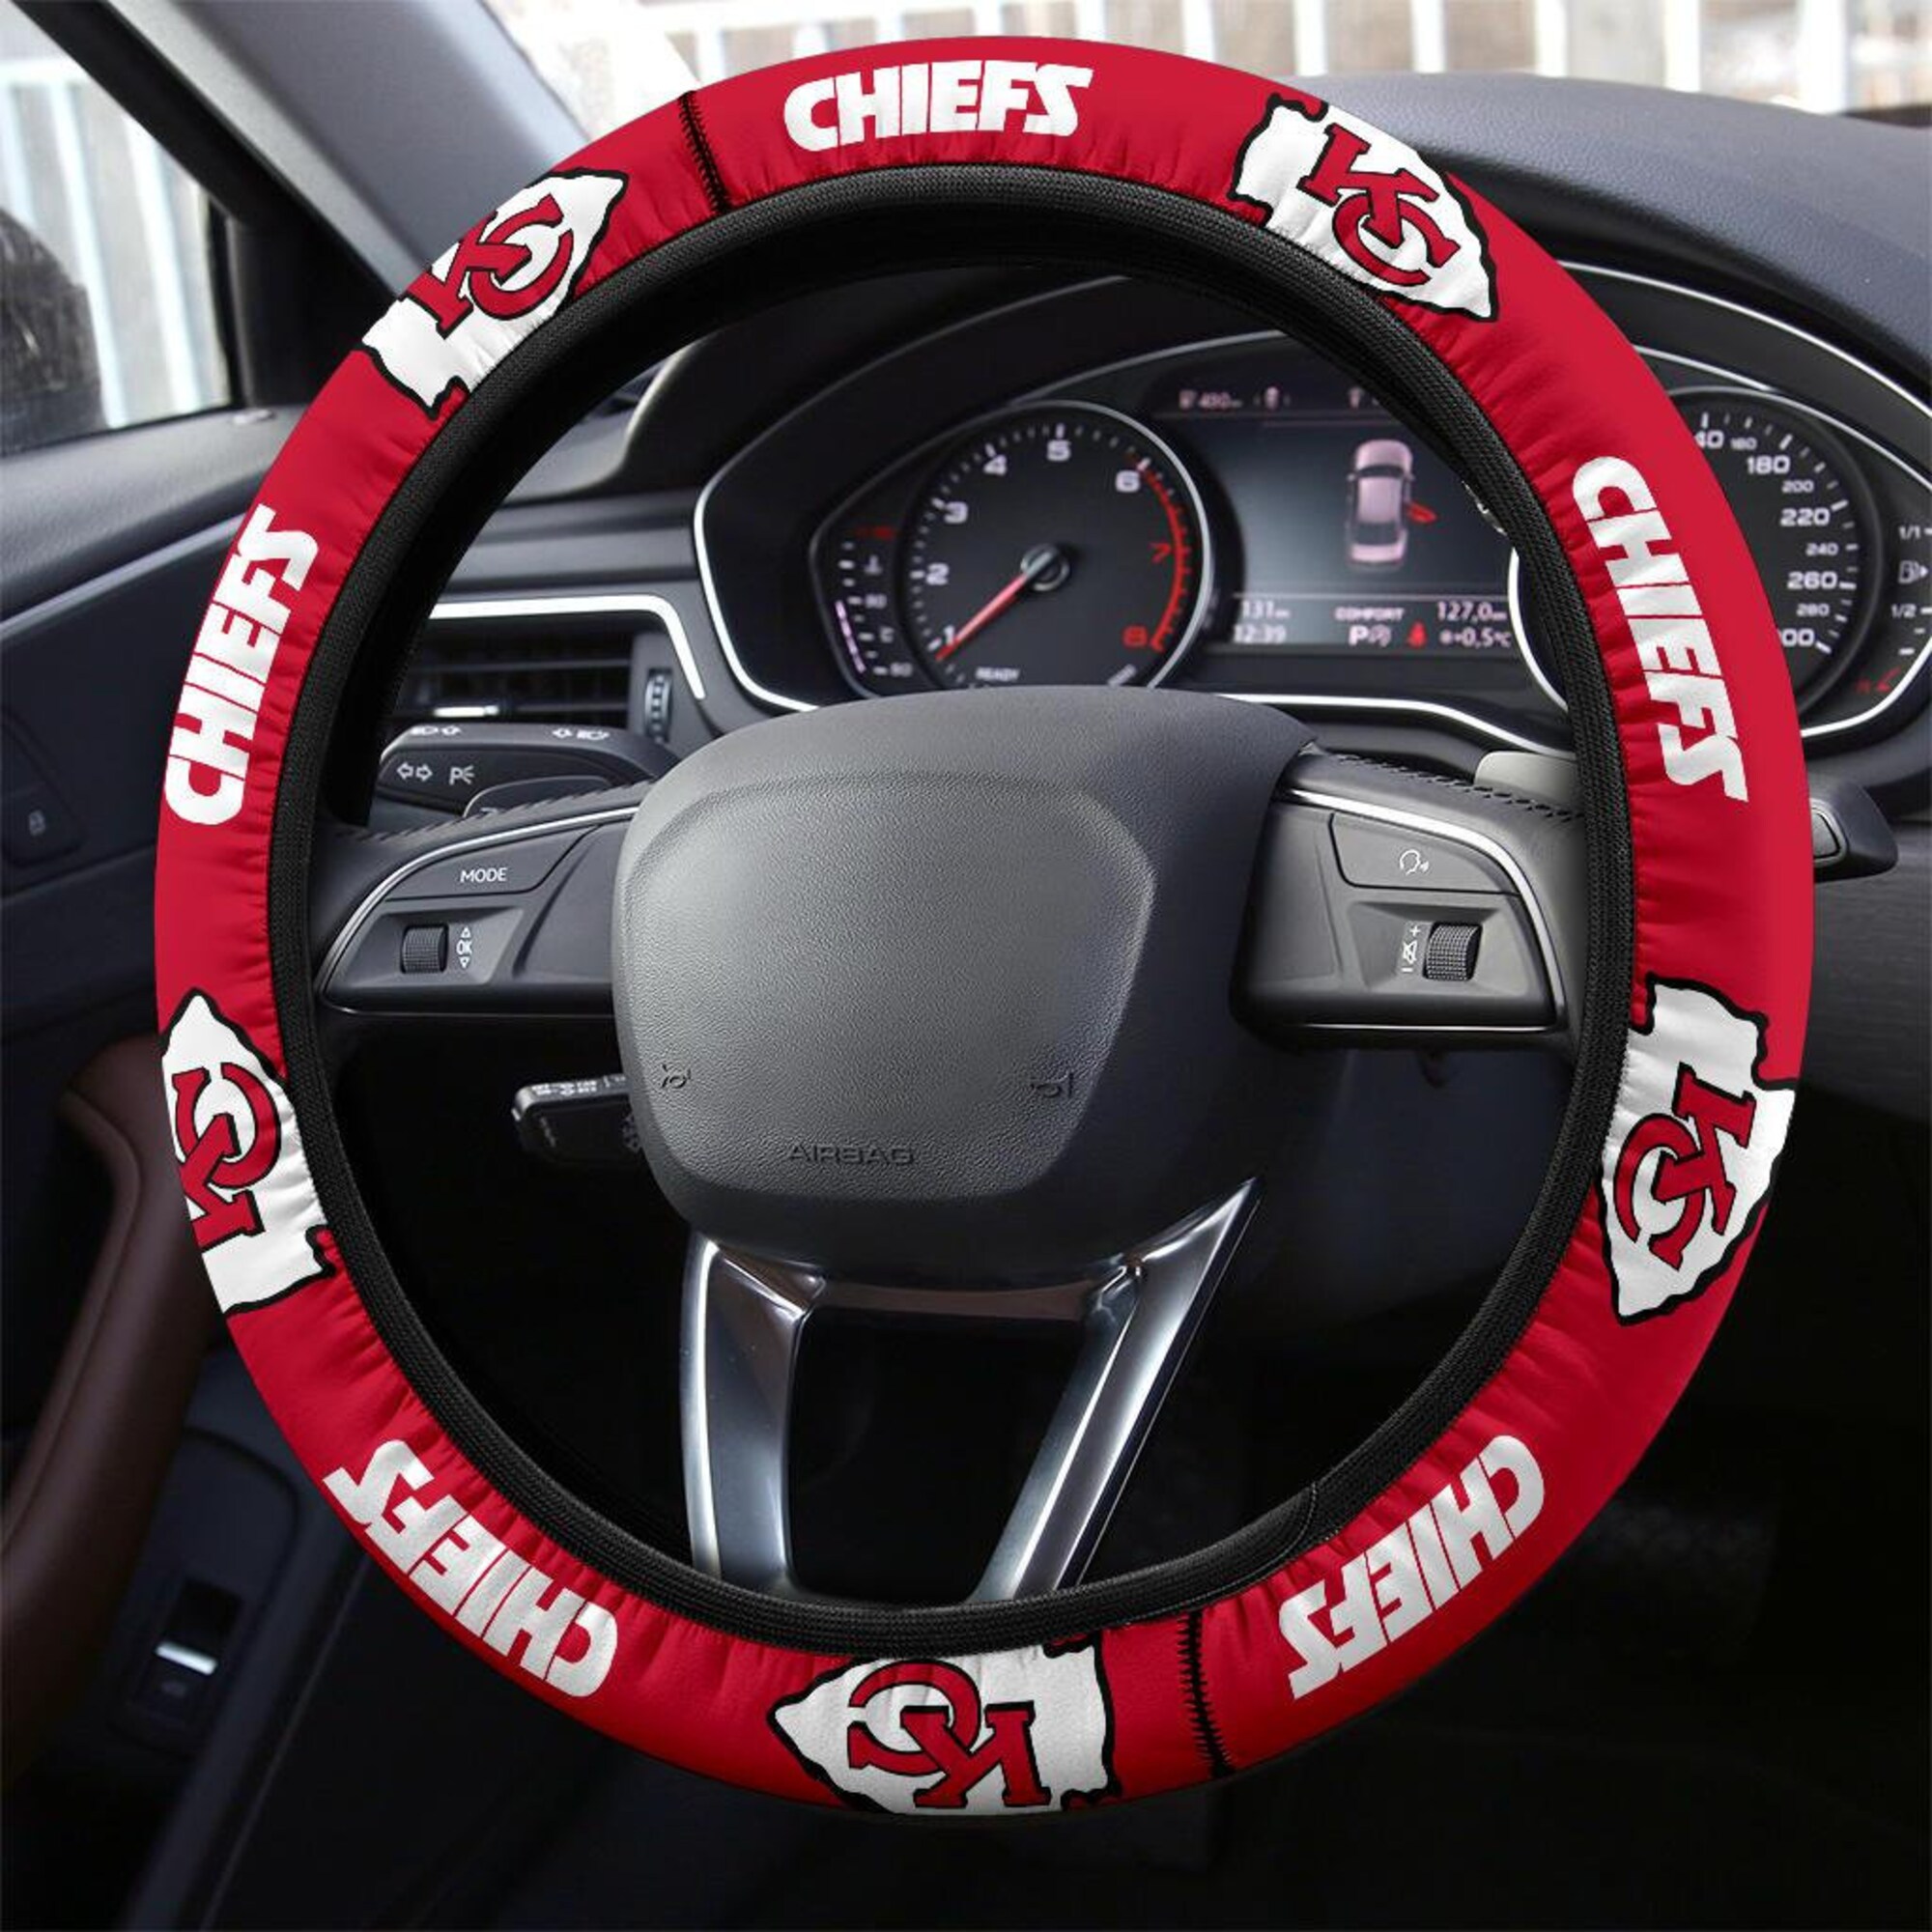 Kansas City Chiefs themed custom steering wheel cover for a fan